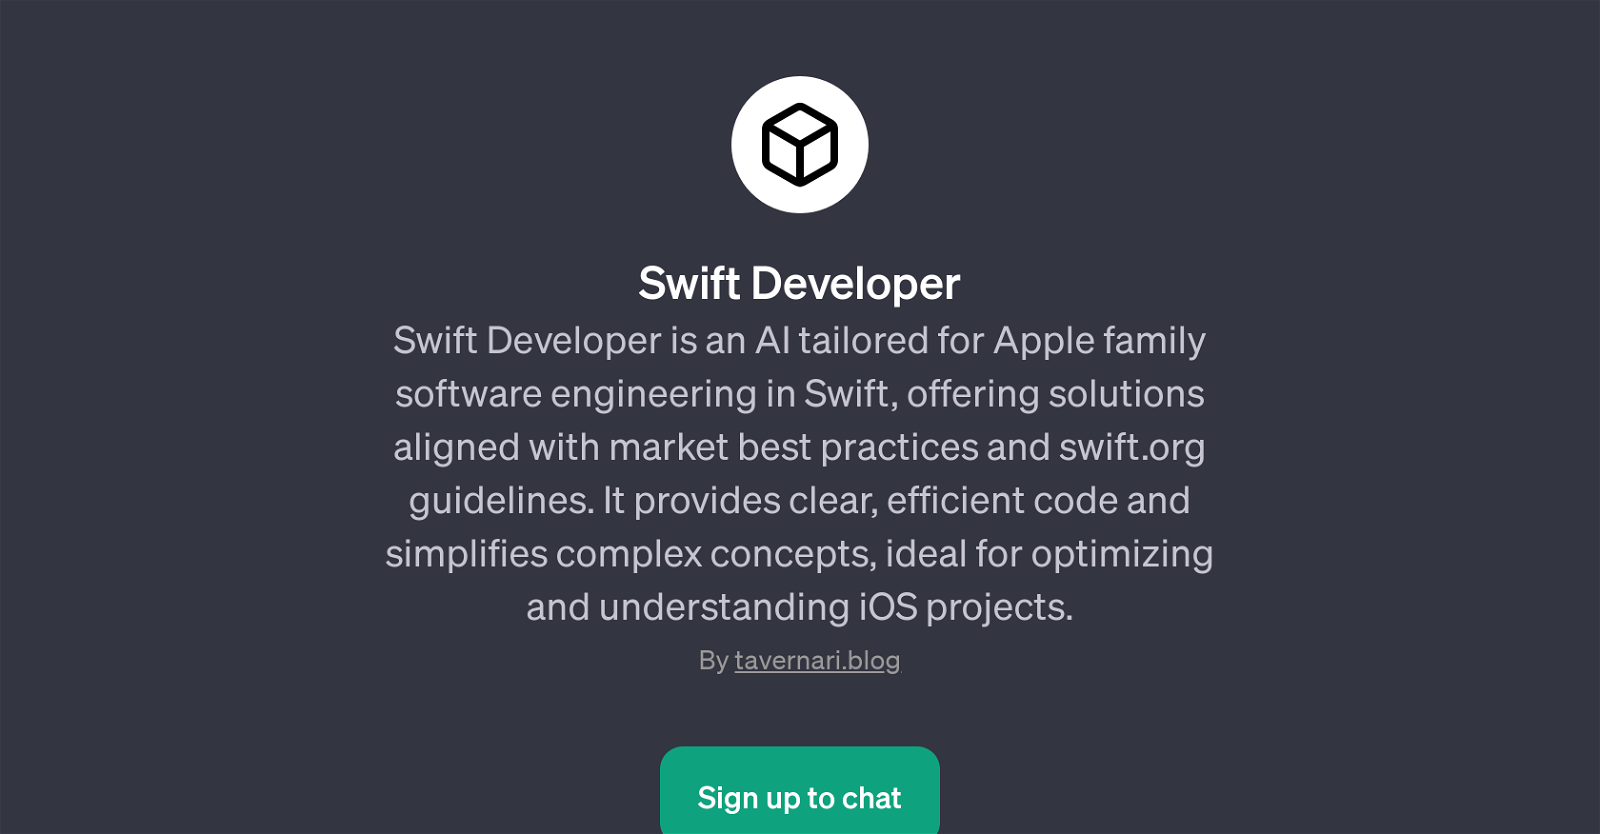 Swift Developer website